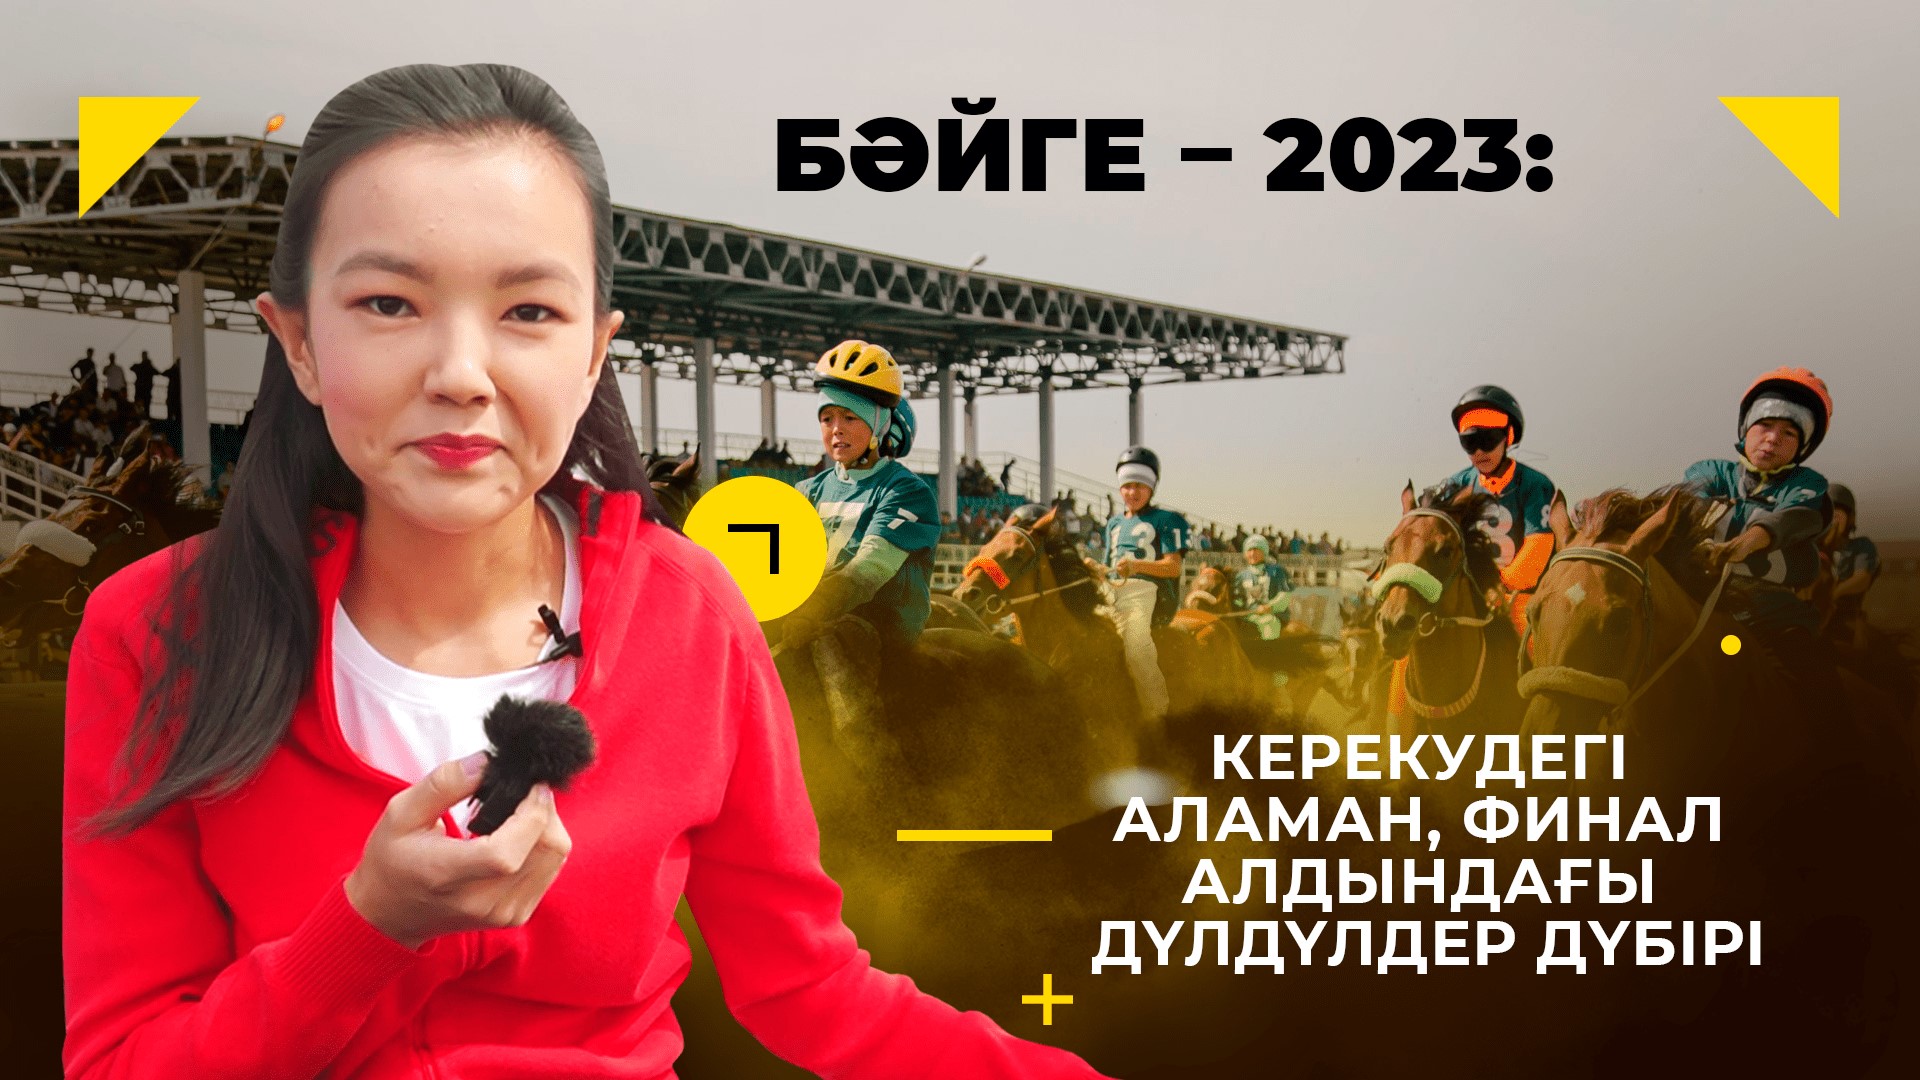 Павлодарский забег Байге 2023